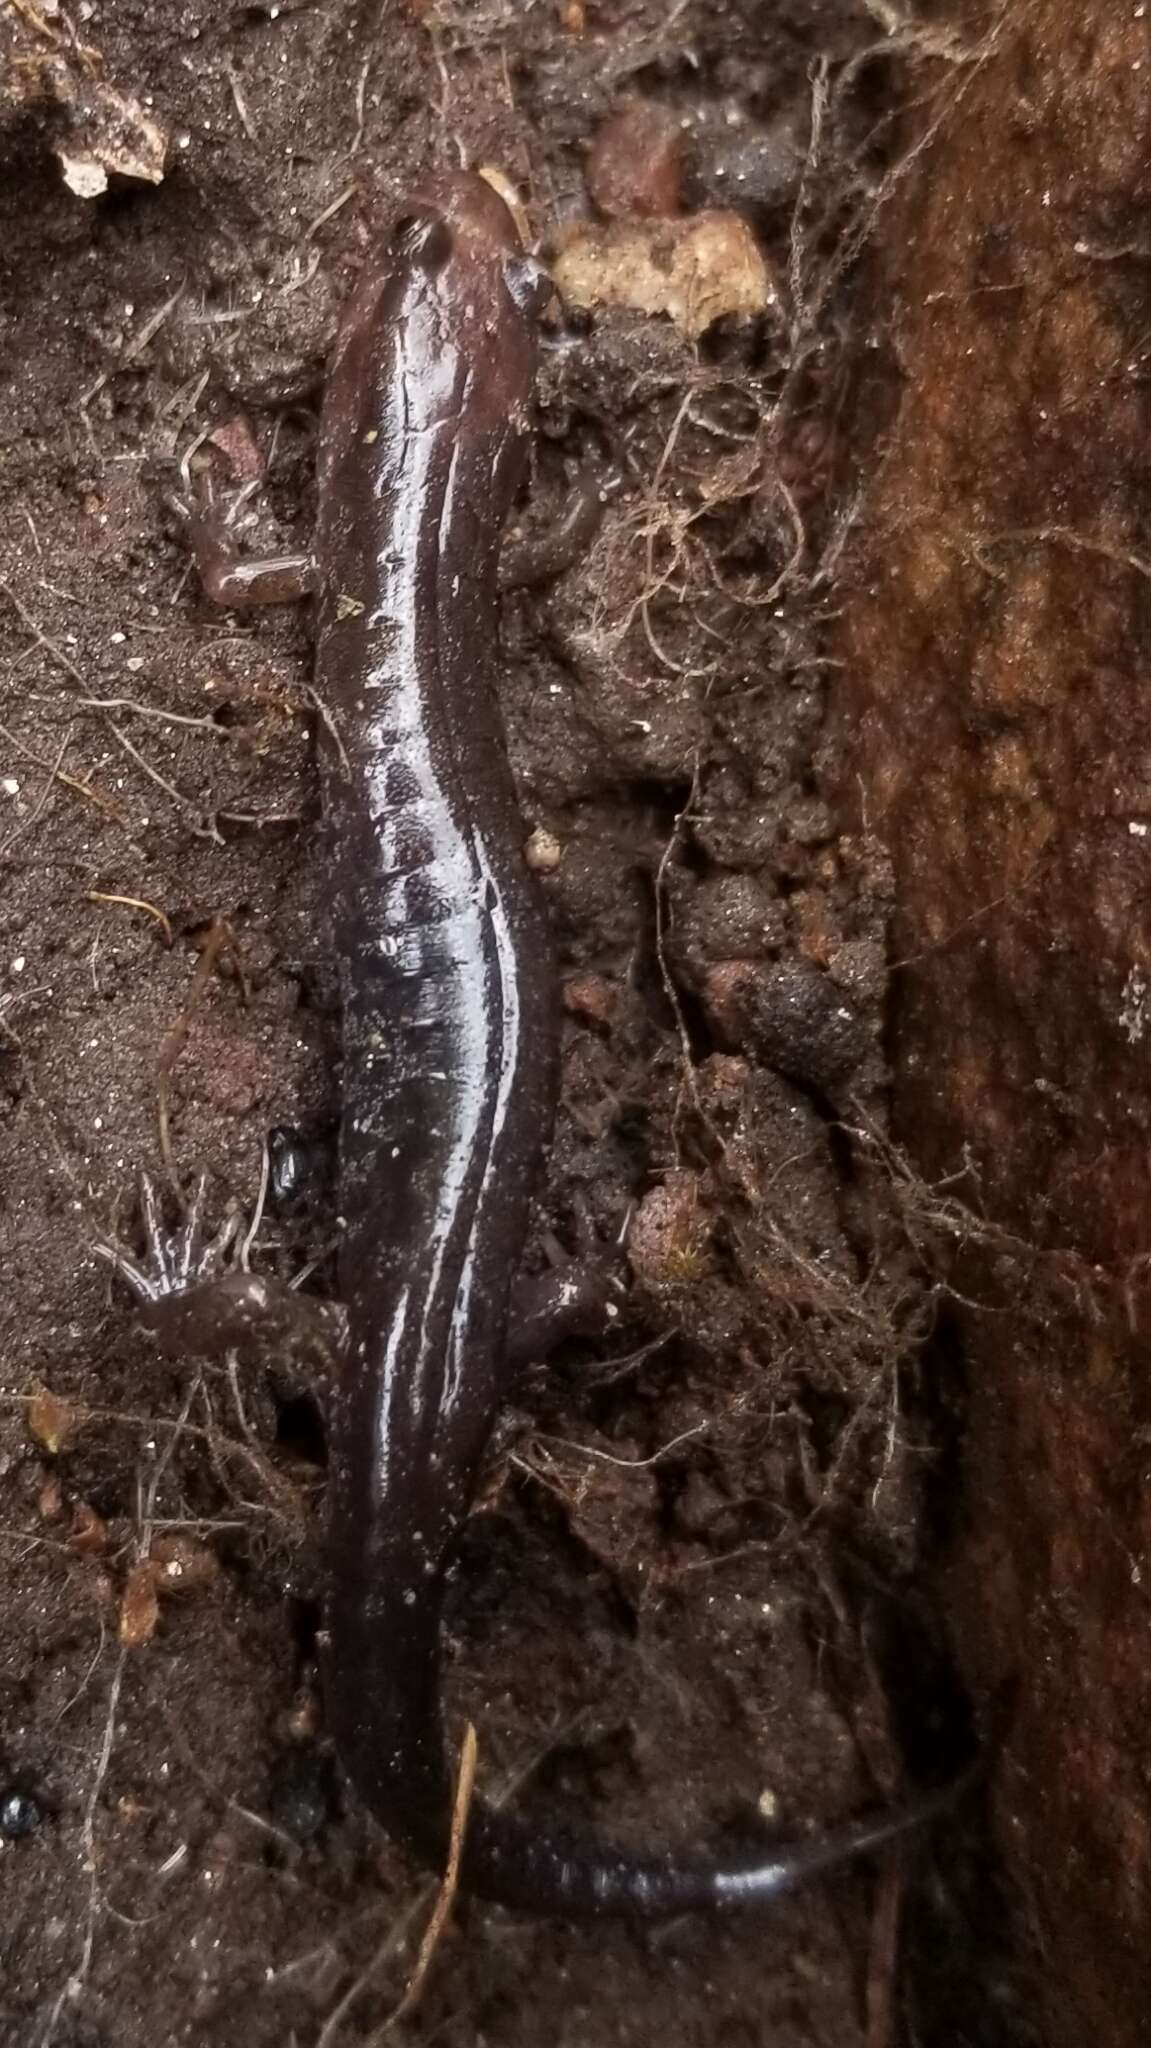 Image of Carolina mountain dusky salamander